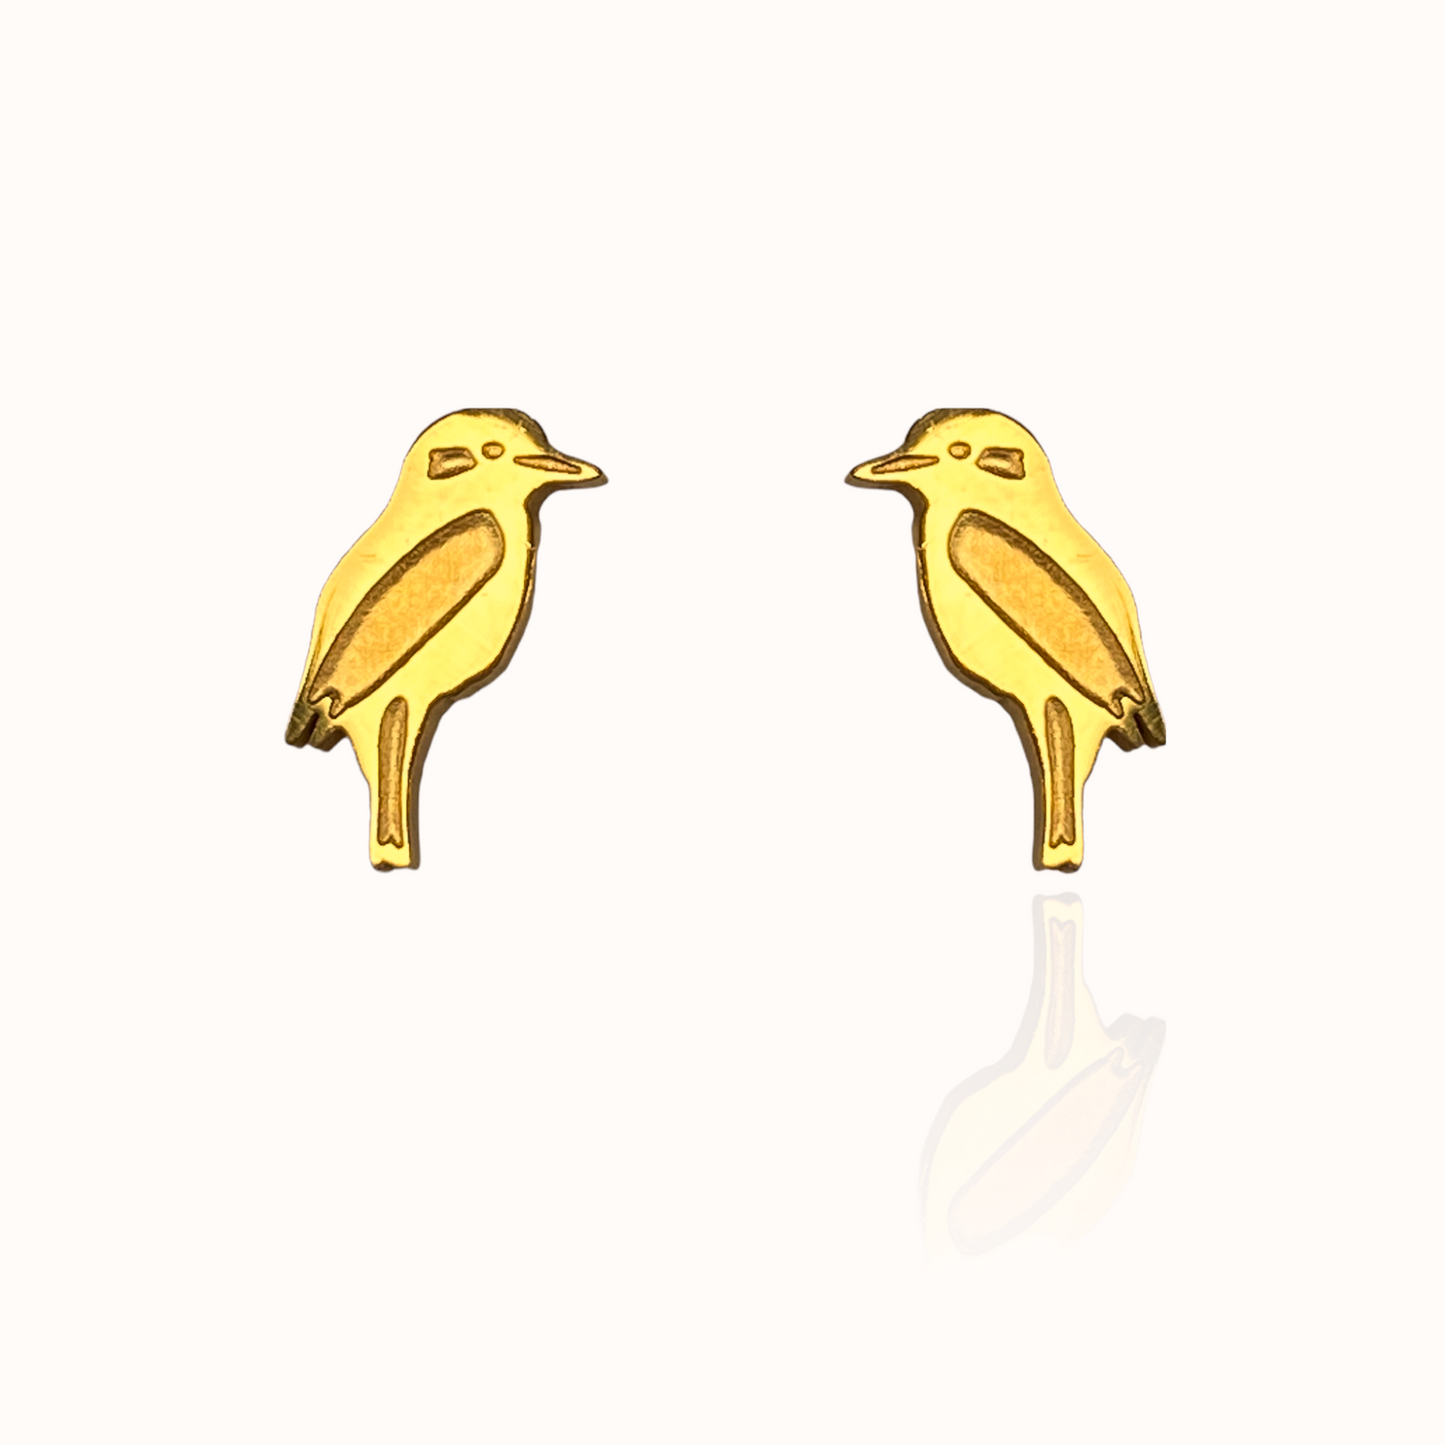 Kookaburra Earring Studs Gold